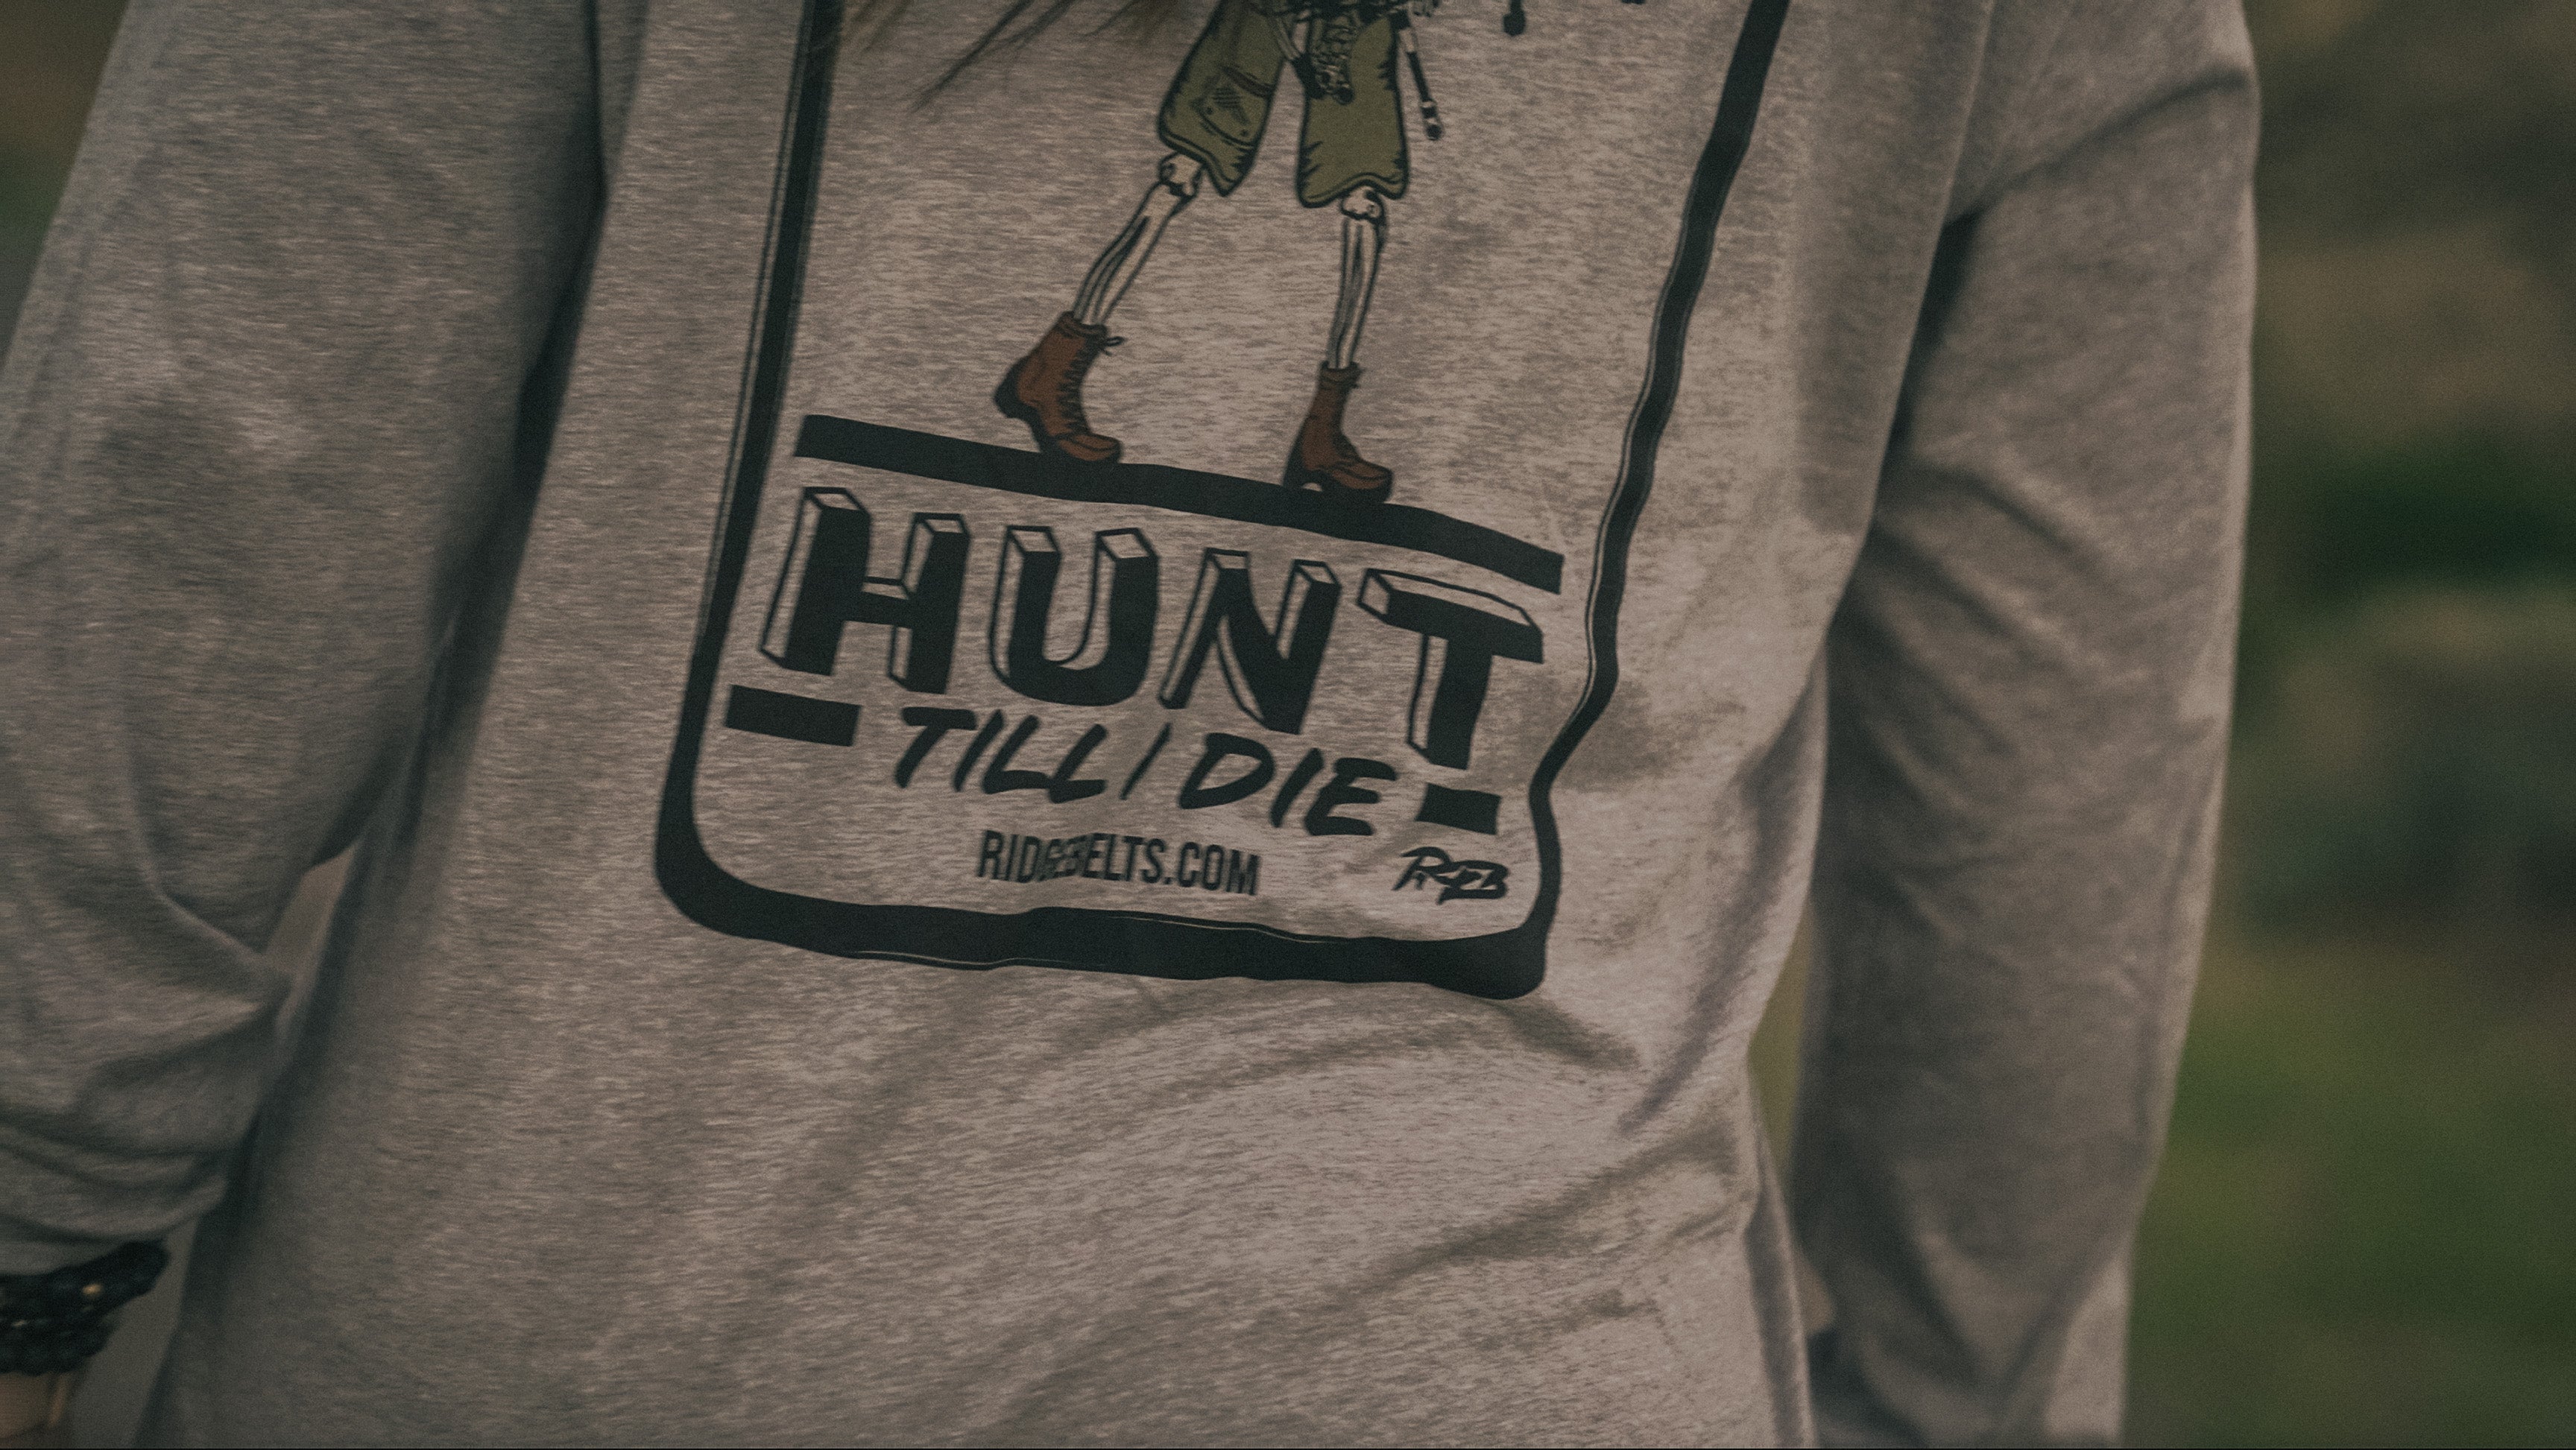 Bow hunting shirt. Skeleton hunting shirt design. Hunt till I die shirt from Ridge Belts. Long sleeve hunting shirt.